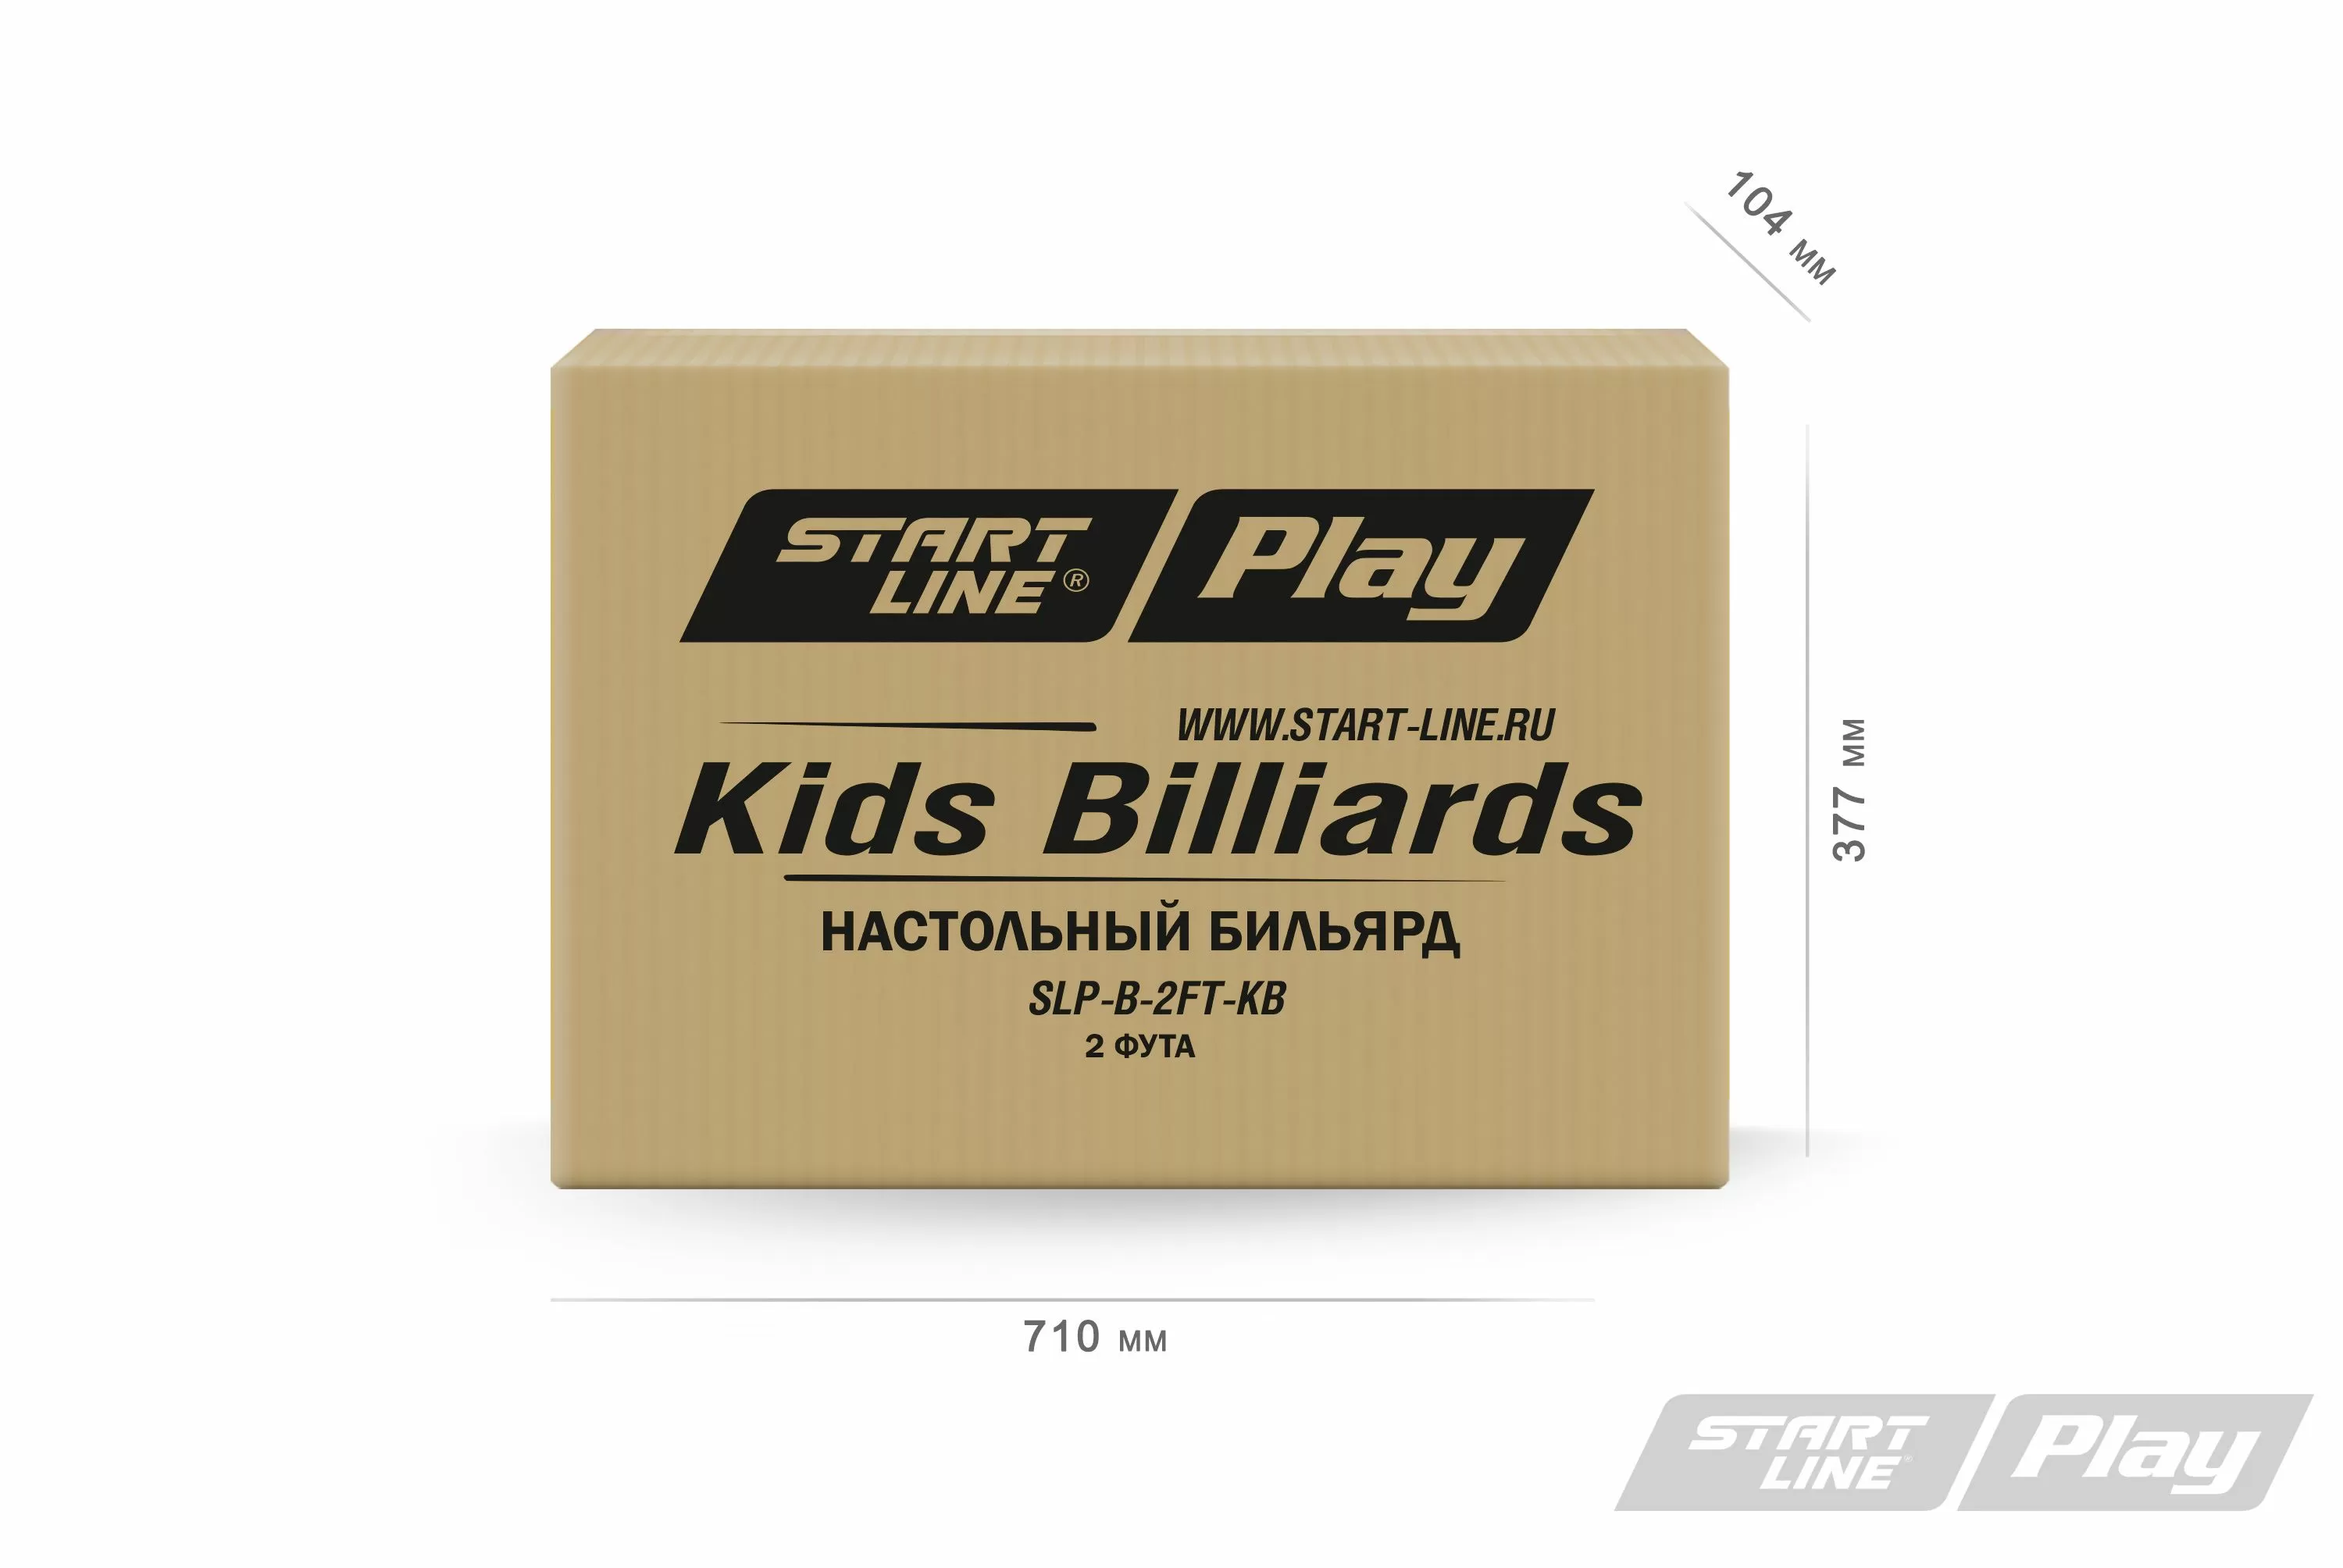 Kids Billiards